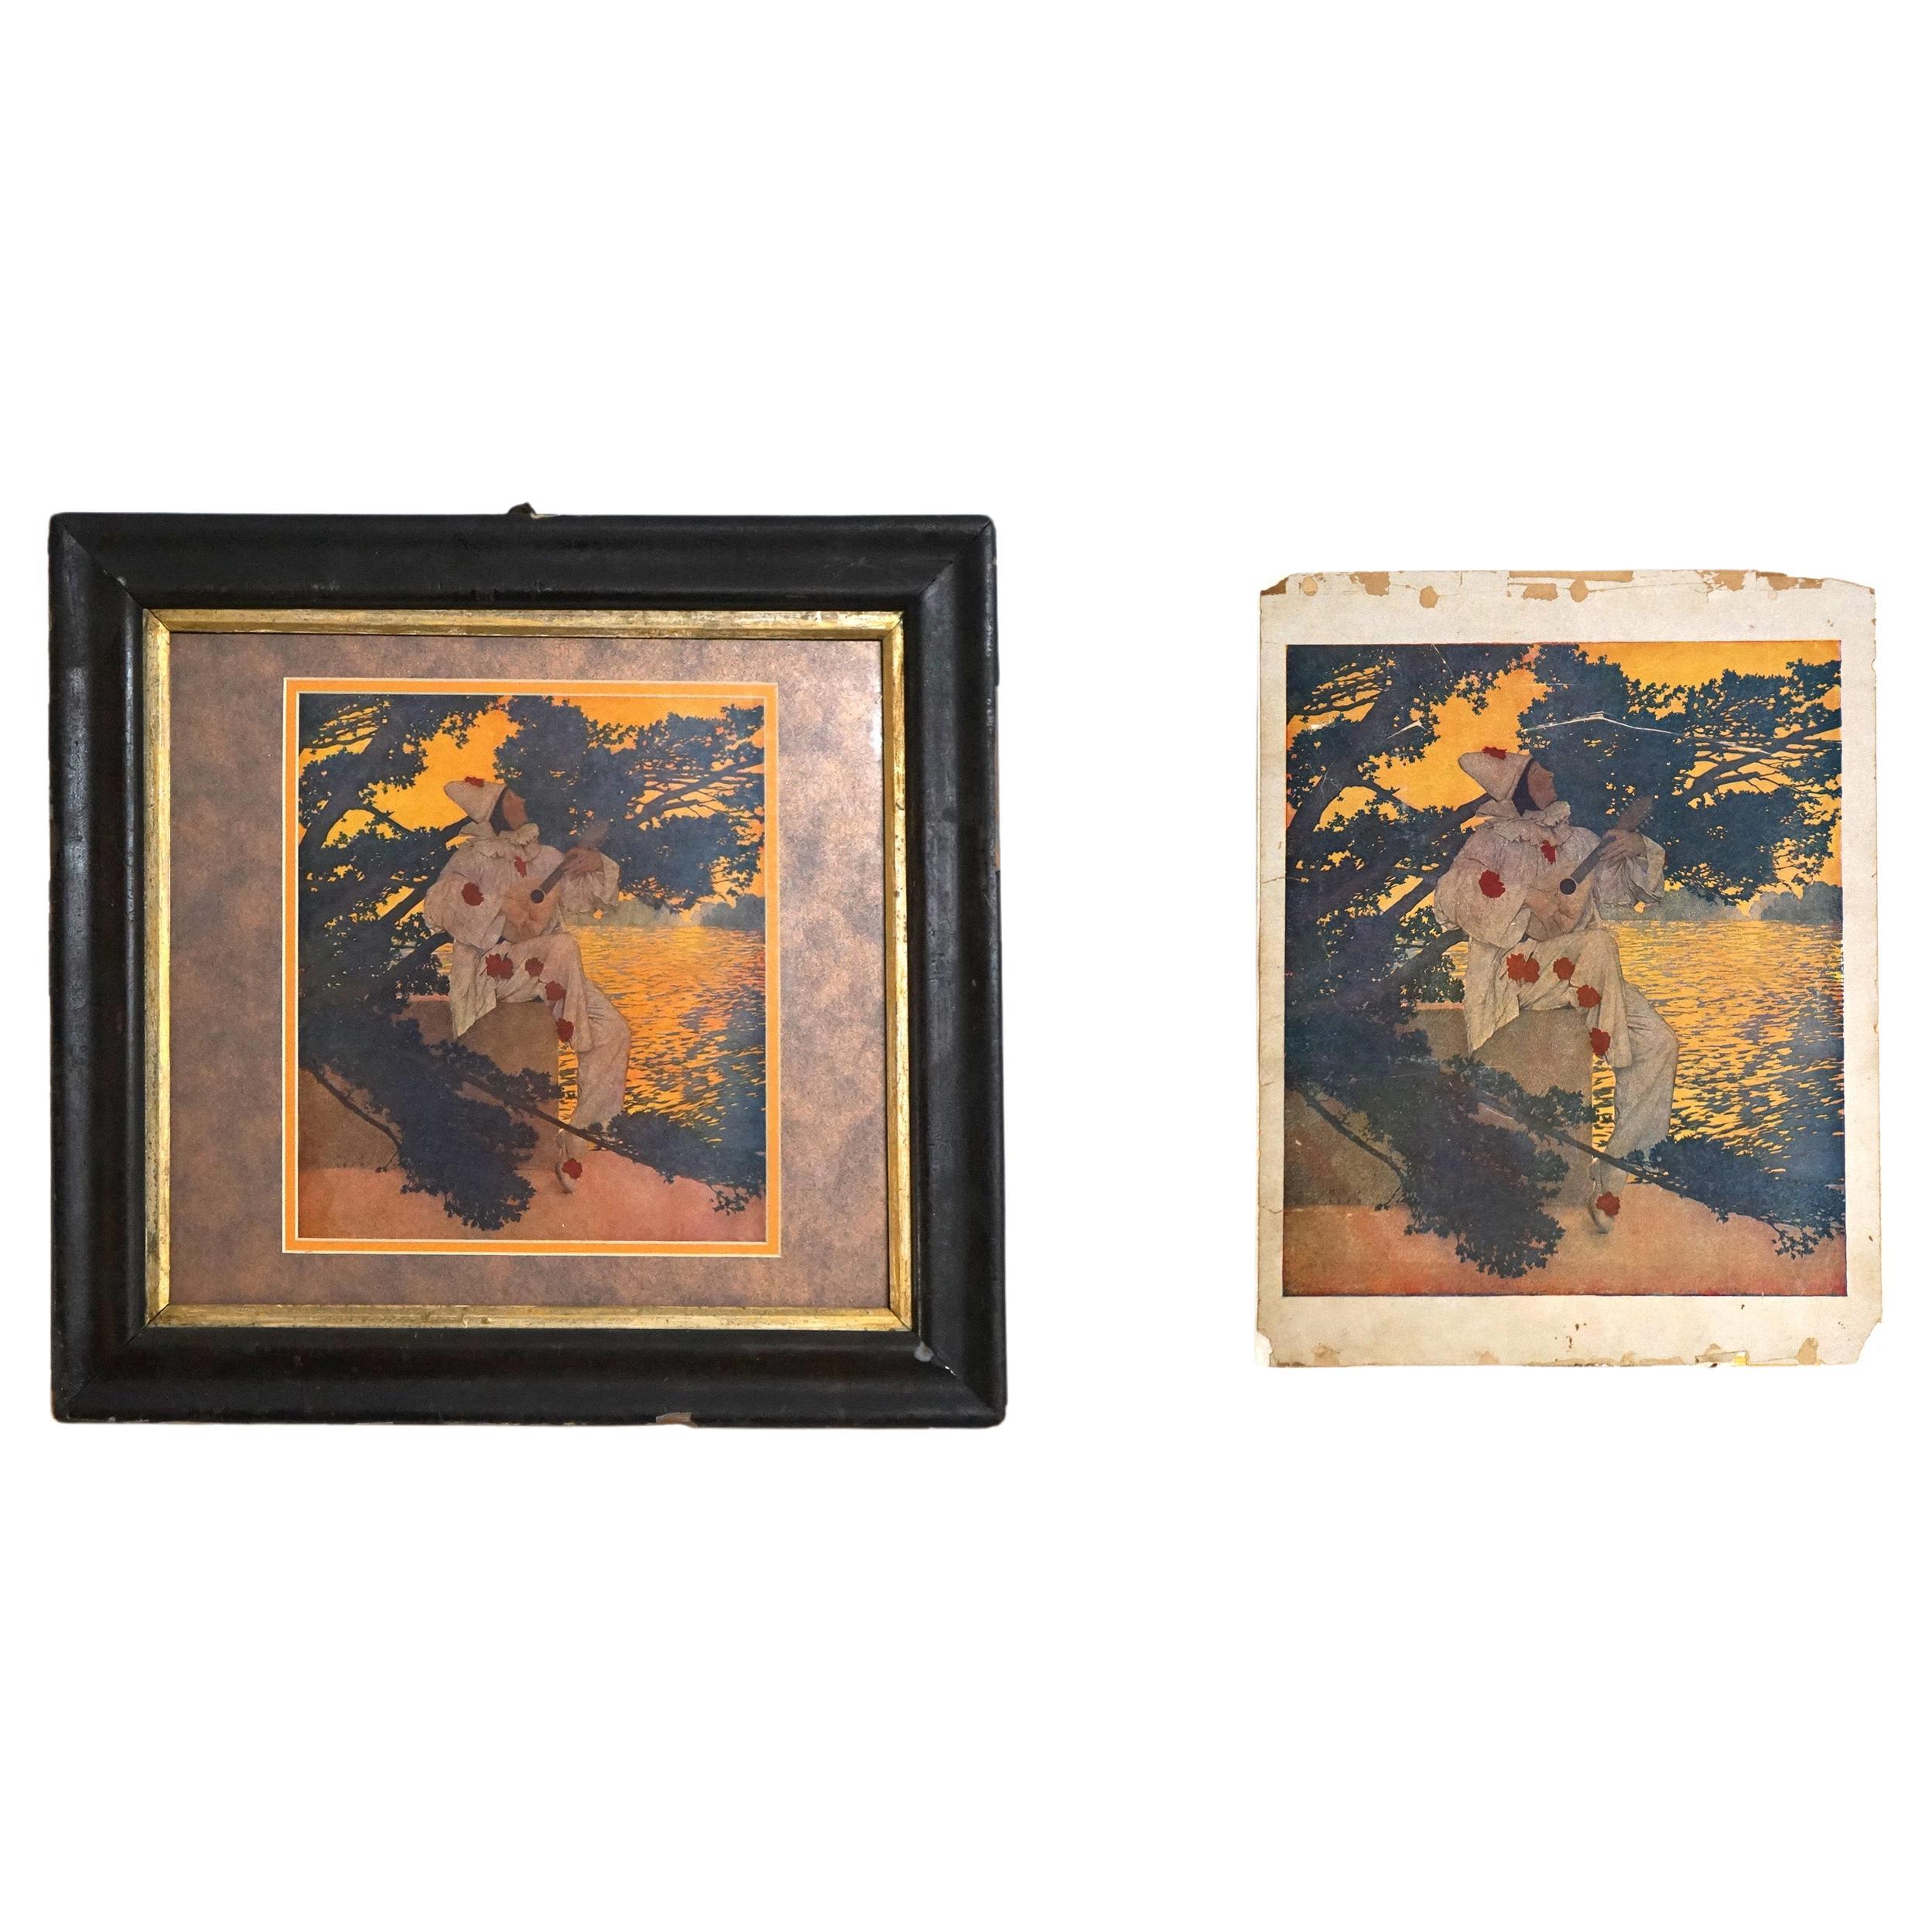 Two Art Deco Antique Maxfield Parrish Prints “Pierrot’s Serenade” C1920 For Sale